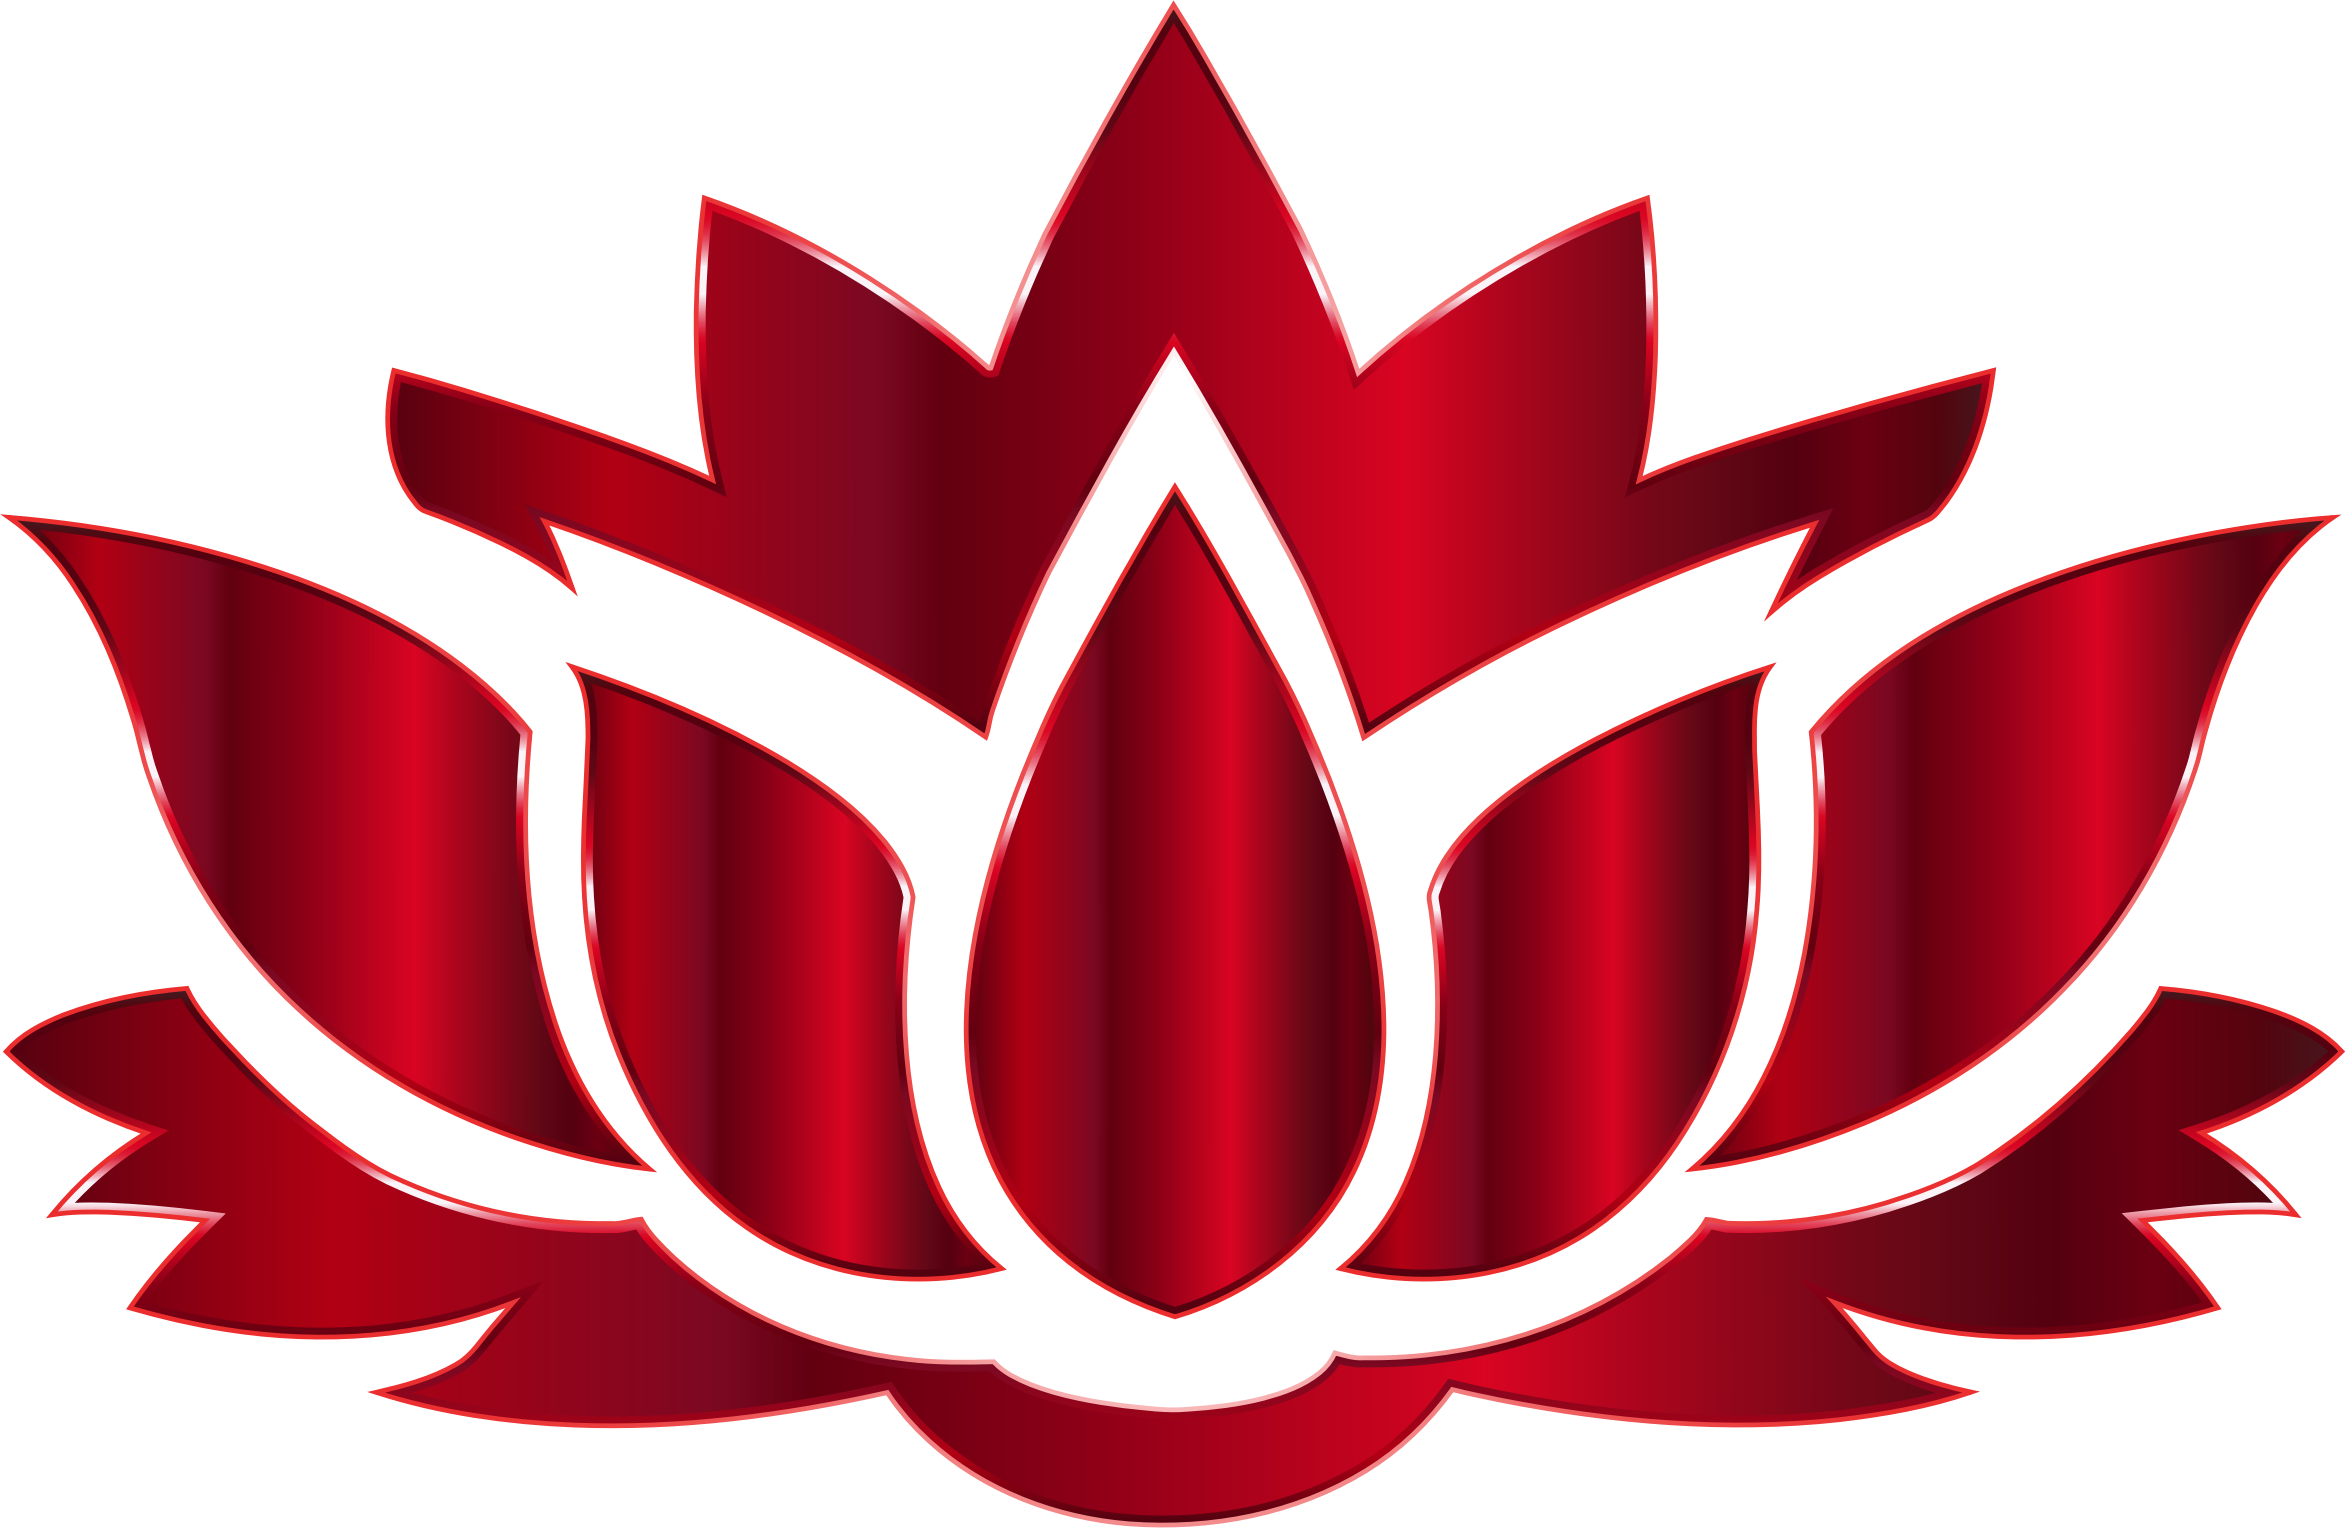 Vermillion Lotus Flower Silhouette No Background SVG Clip arts